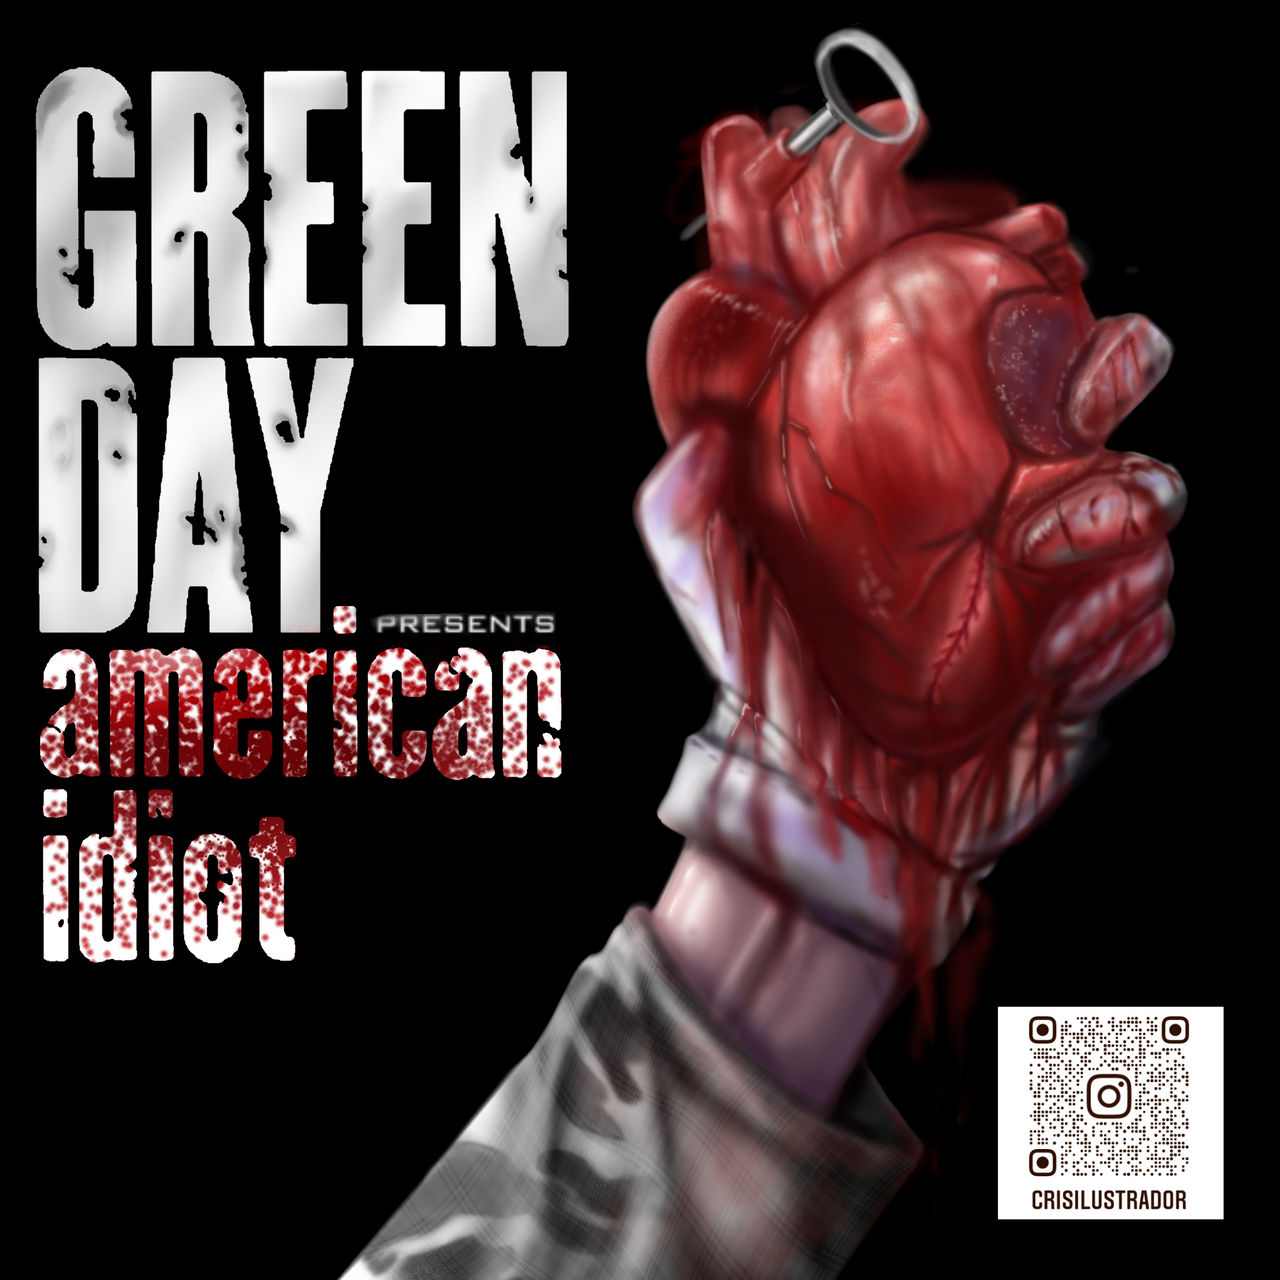 American Idiot - Green Day 